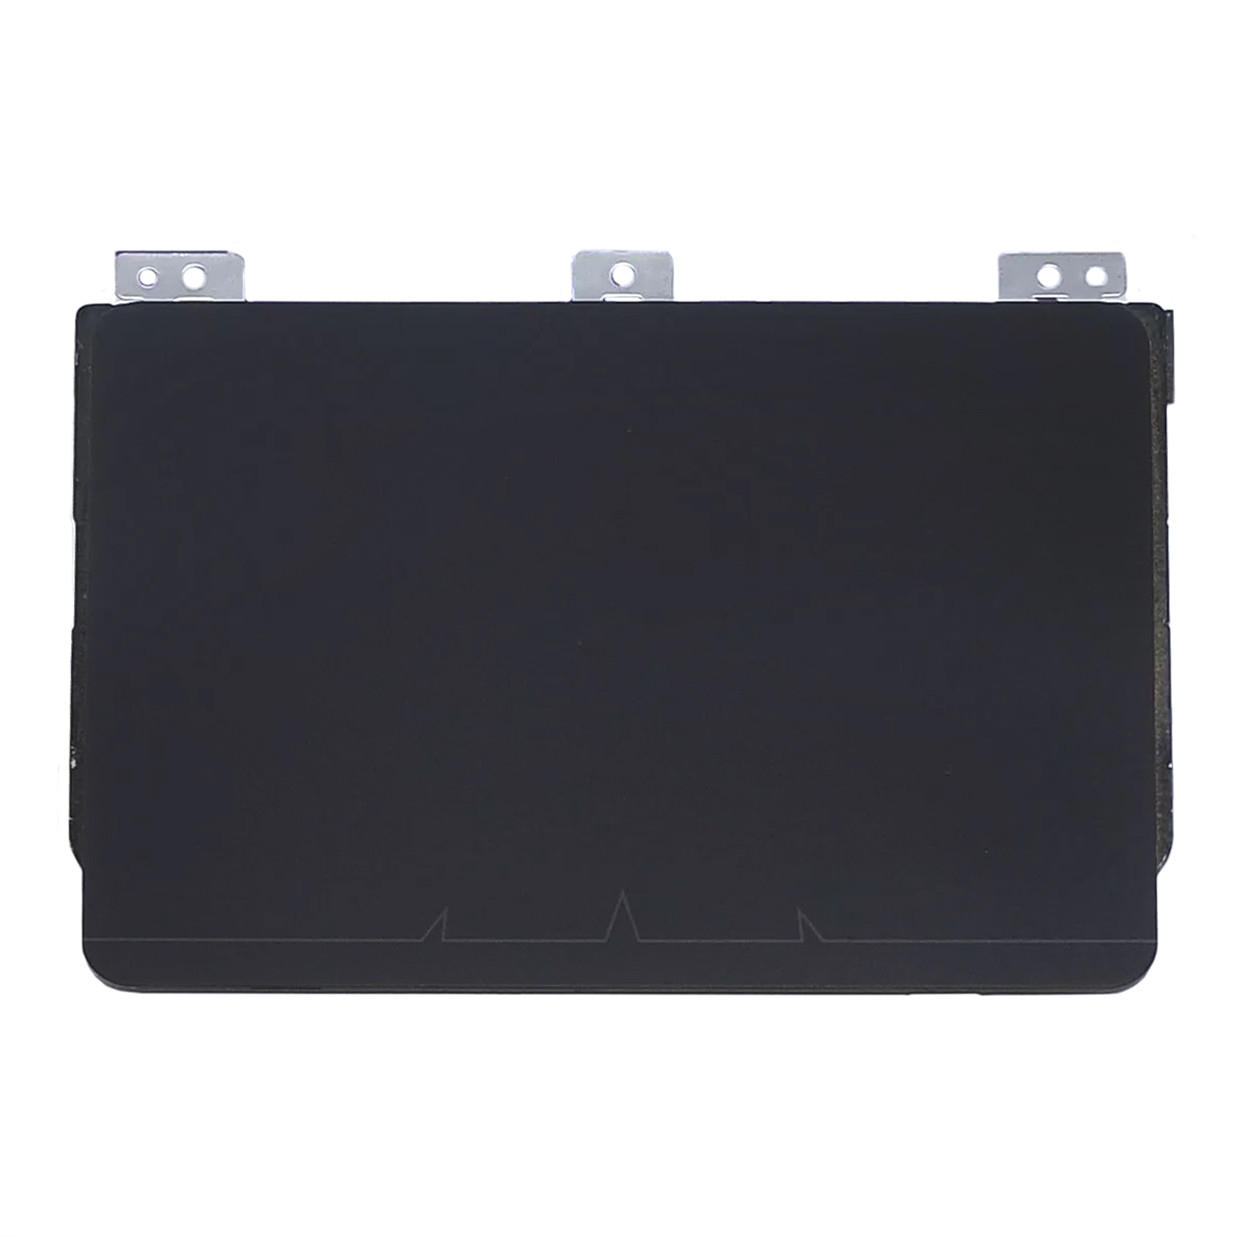 Тачпад (Touchpad) для Asus ROG STRIX GL503 черный